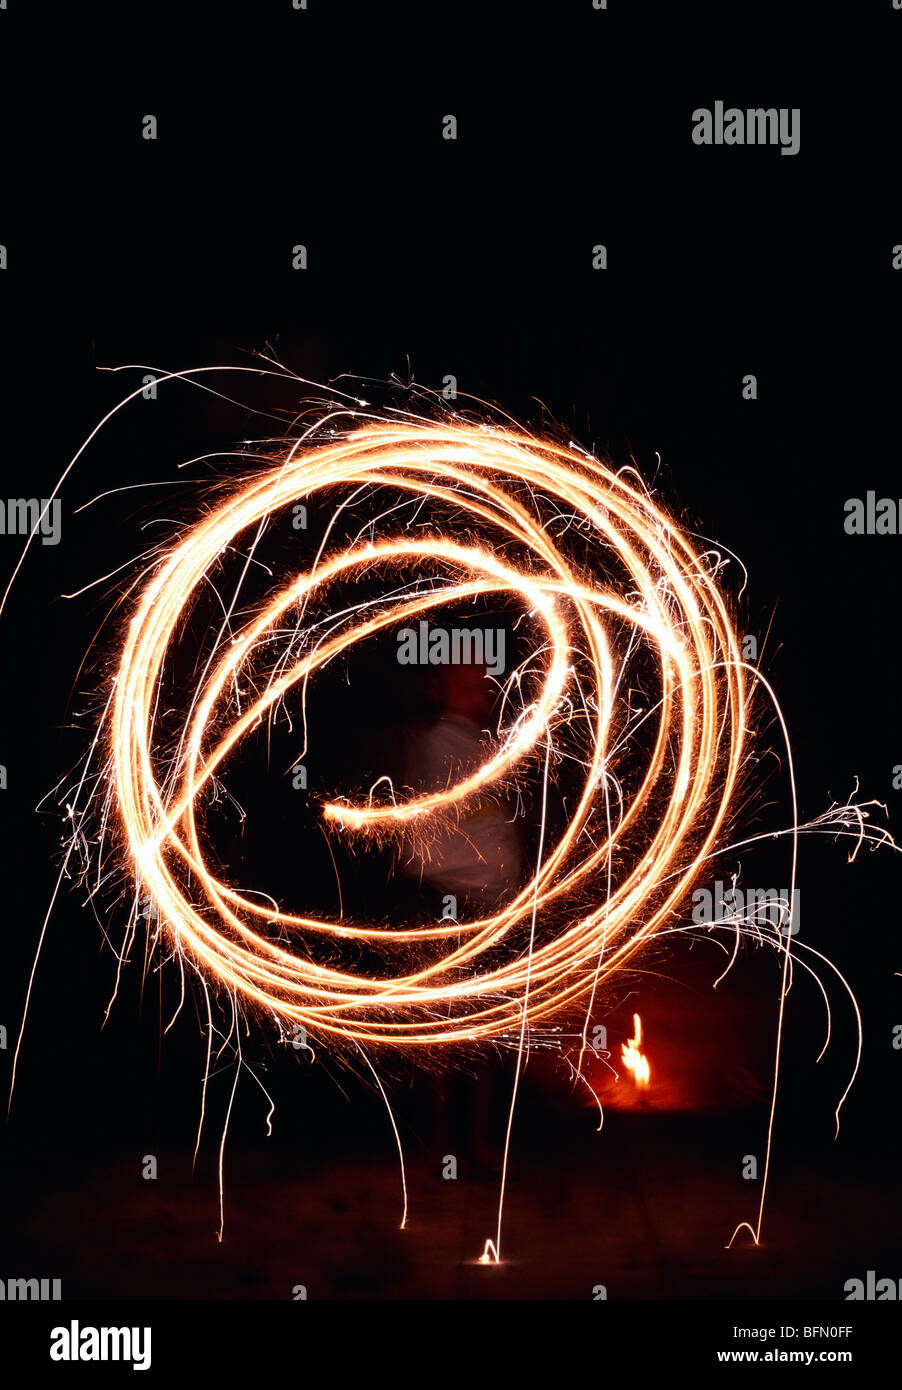 NMK 60917 : Circles of sparklers display of fireworks ; Diwali deepawali festival ; Bombay Mumbai ; Maharashtra ; India Stock Photo